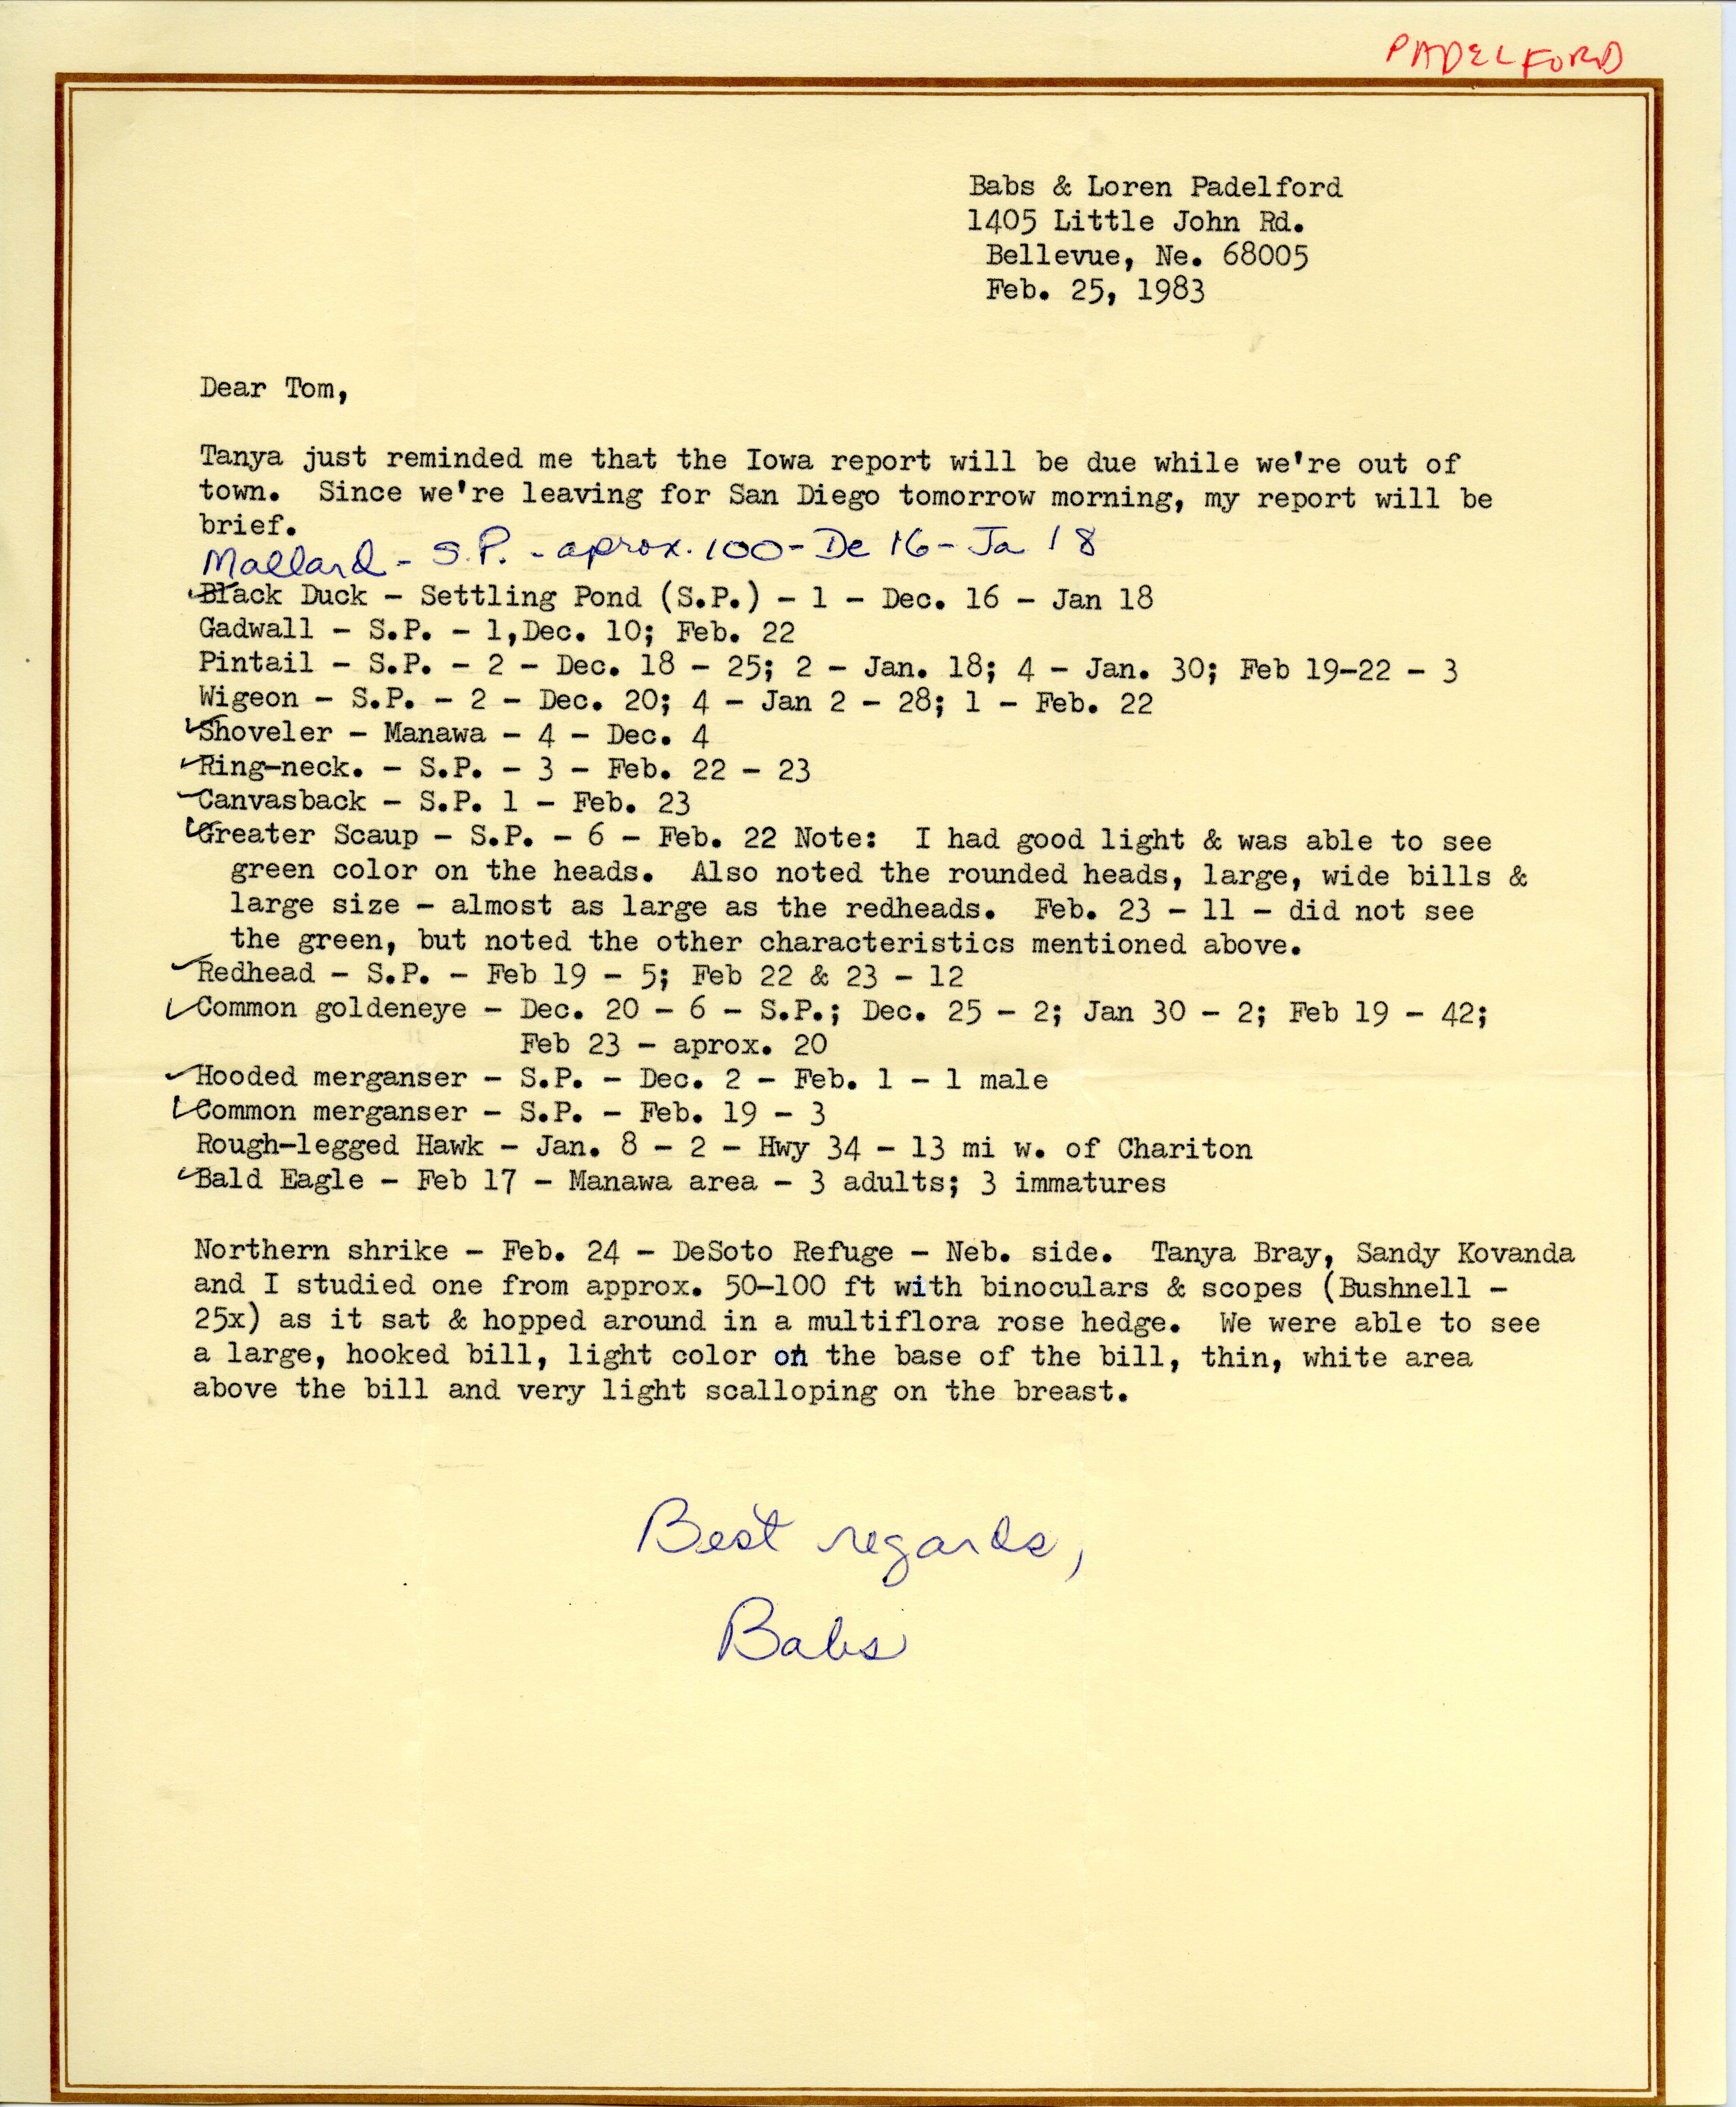 Babs Padelford letter to Thomas H. Kent regarding winter bird sightings, February 25, 1983